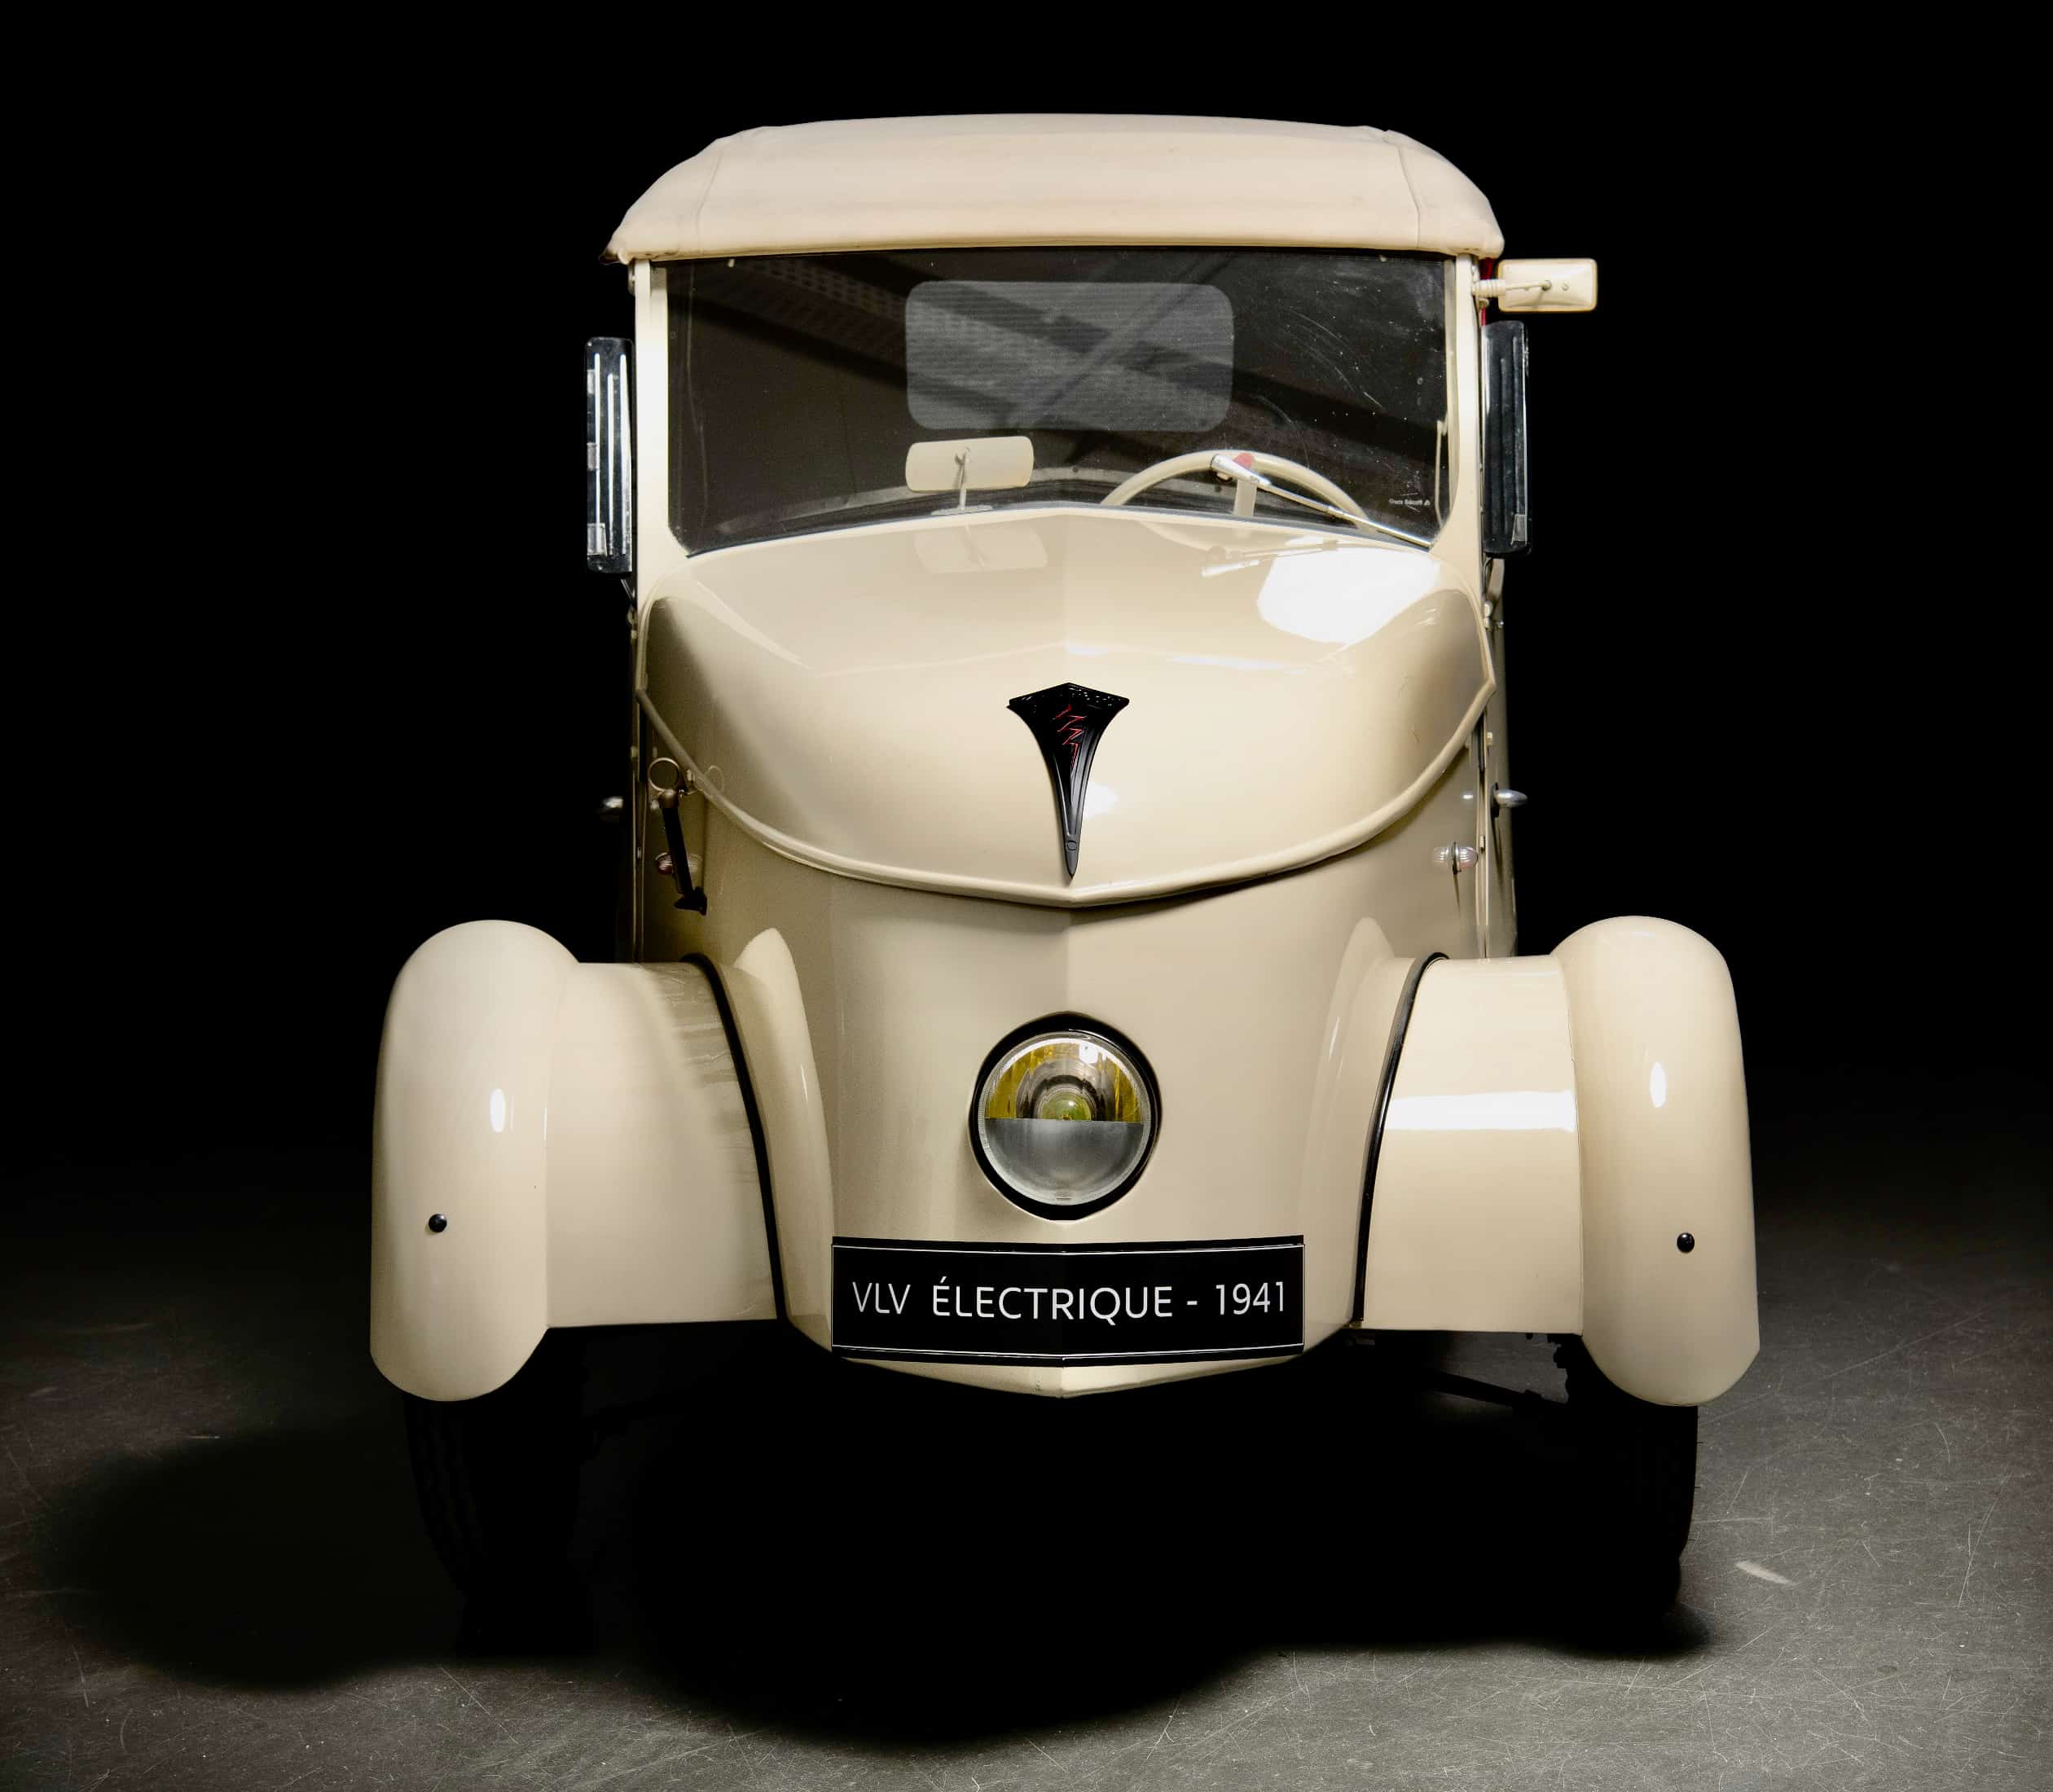 Peugeot, Peugeot traces its EV history to 1941, ClassicCars.com Journal